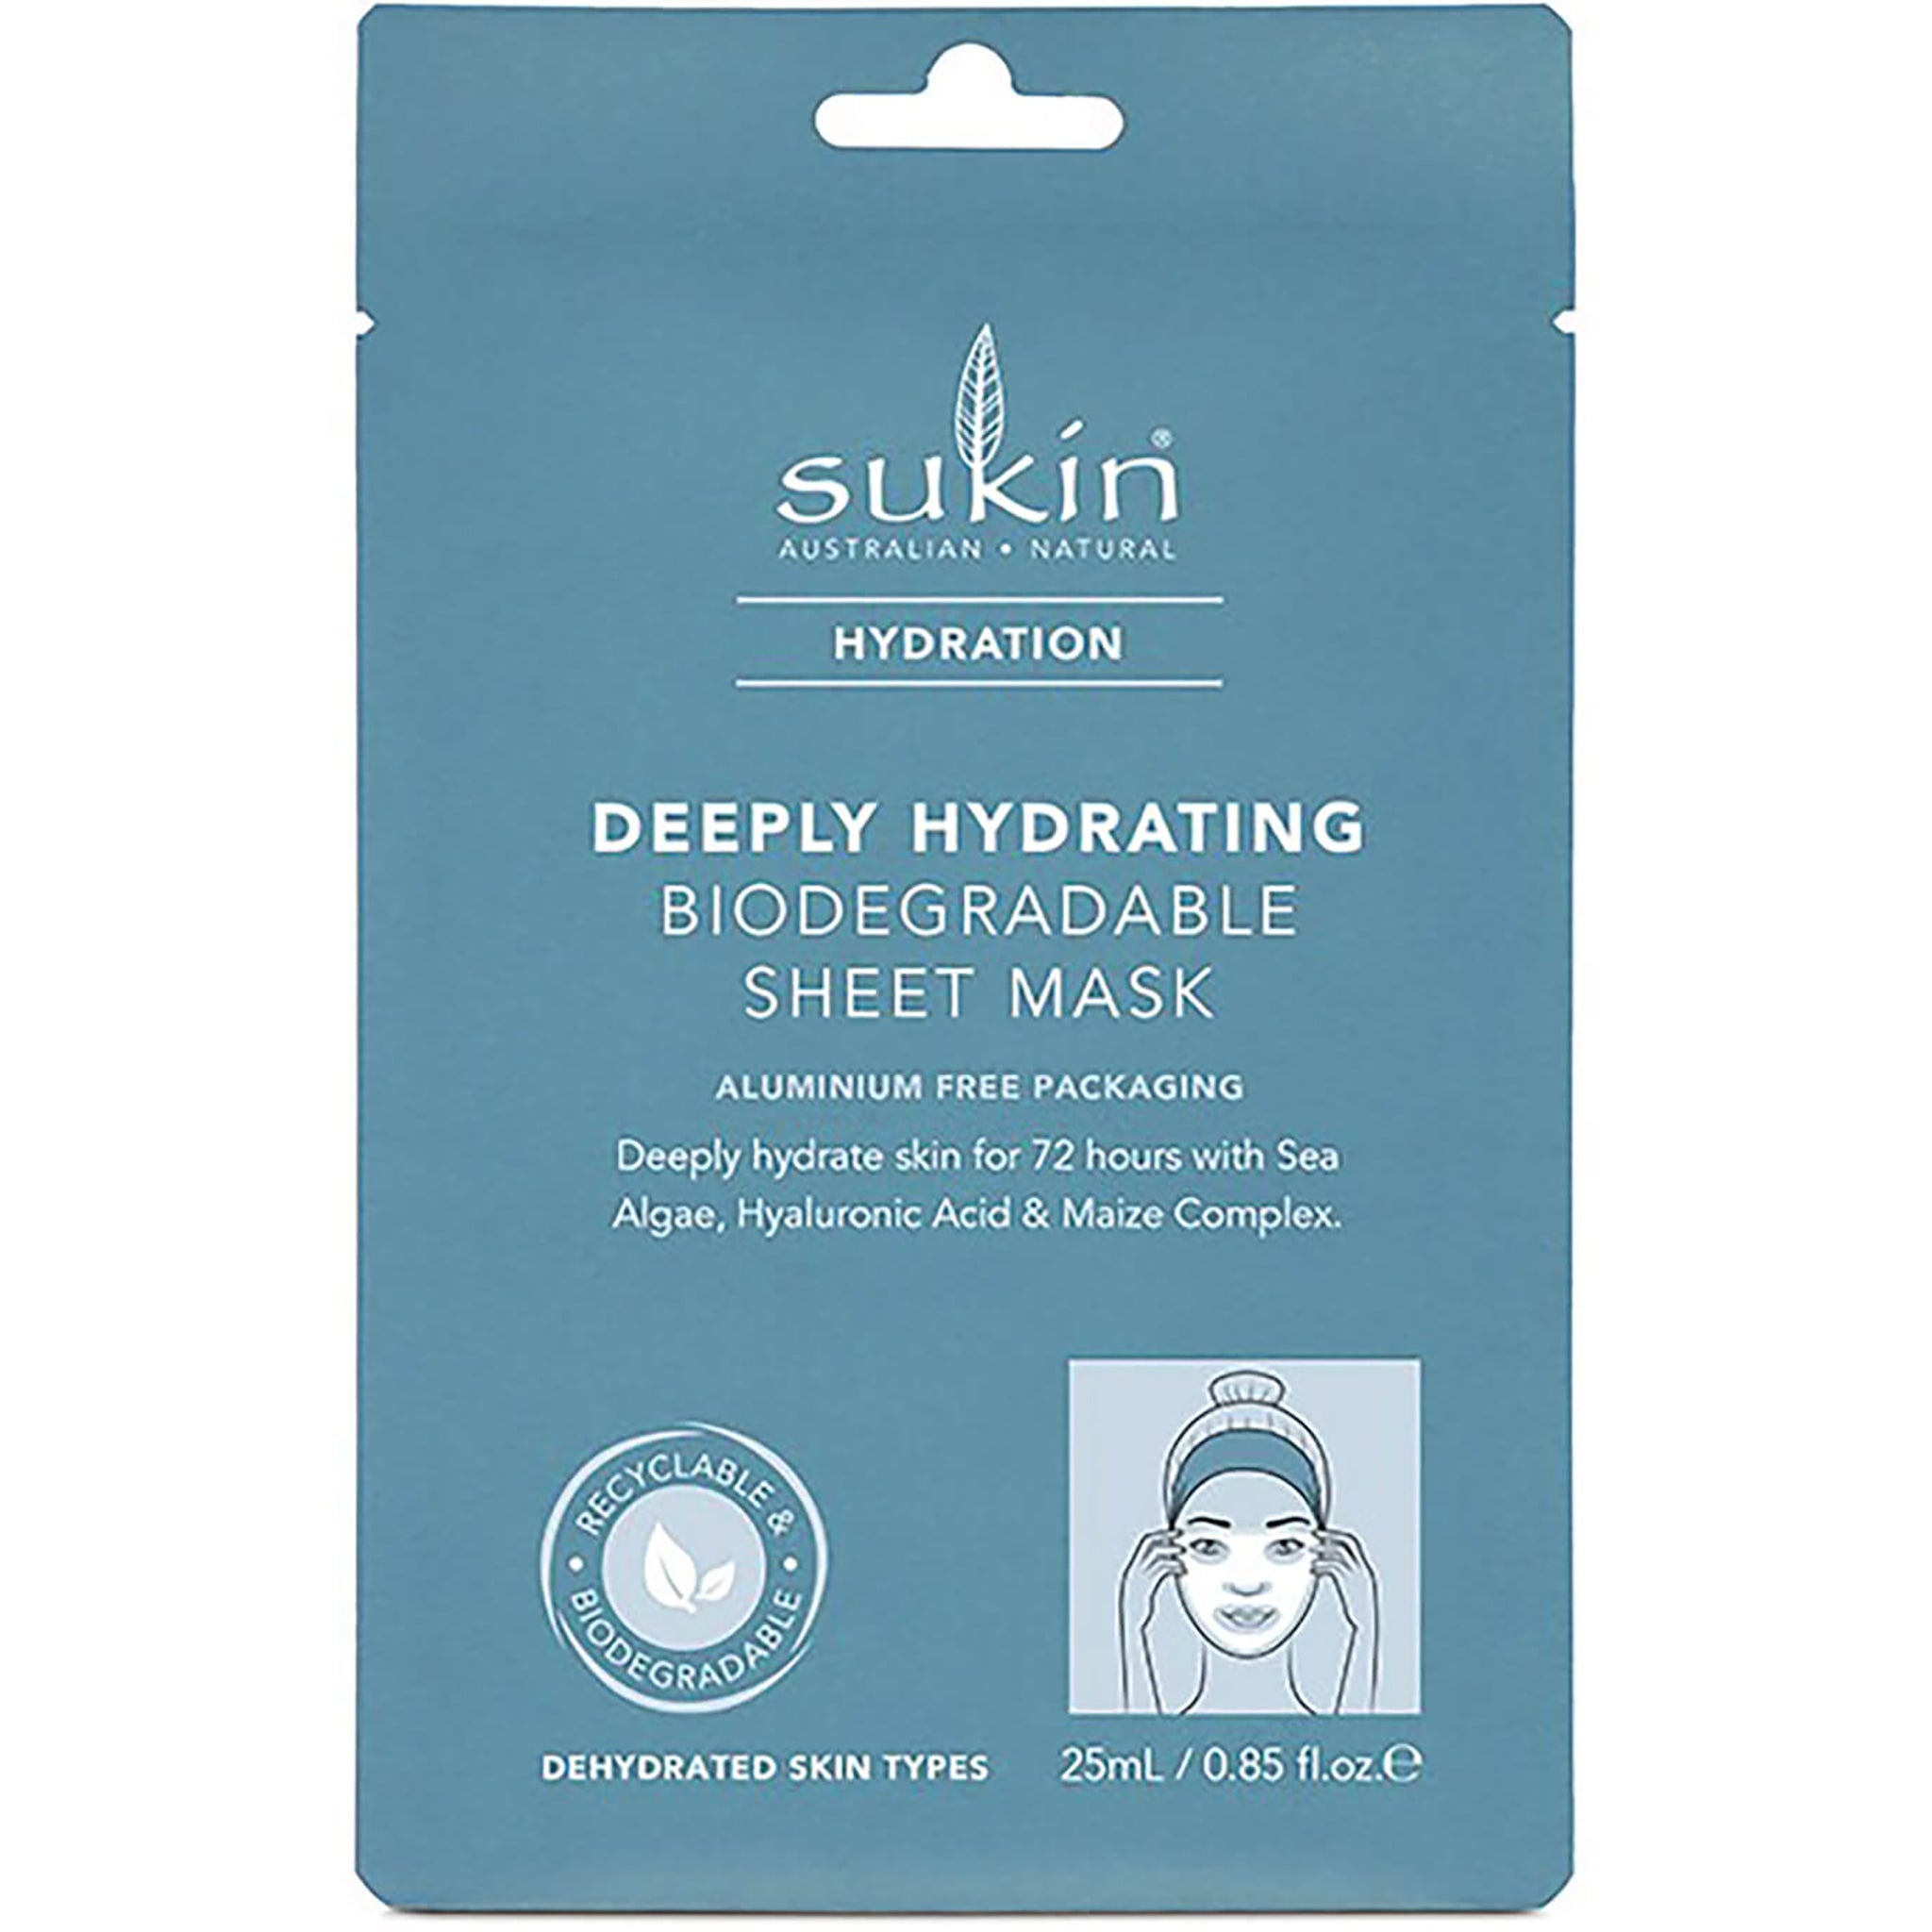 Hydration | Deeply Hydrating Biodegradeable Sheet Mask